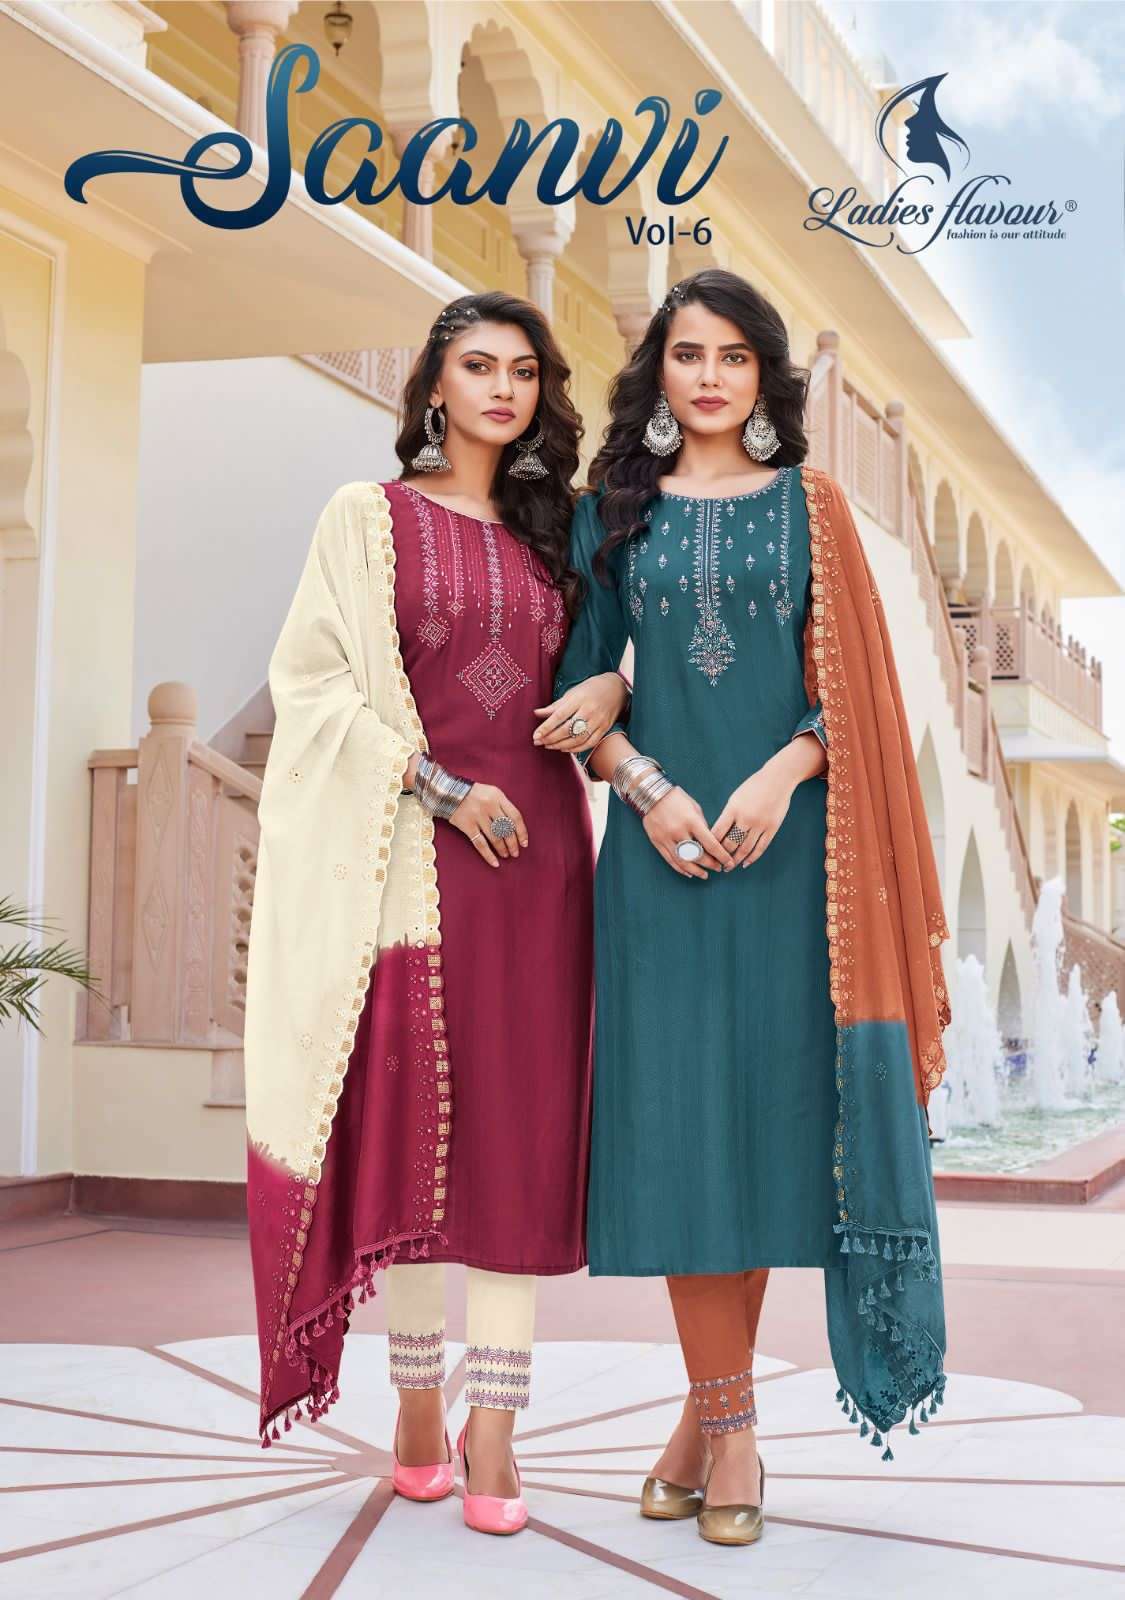 ladies flavour saanvi vol-6 6001-6006 series stylish designer top bottom with dupatta wholesale price surat